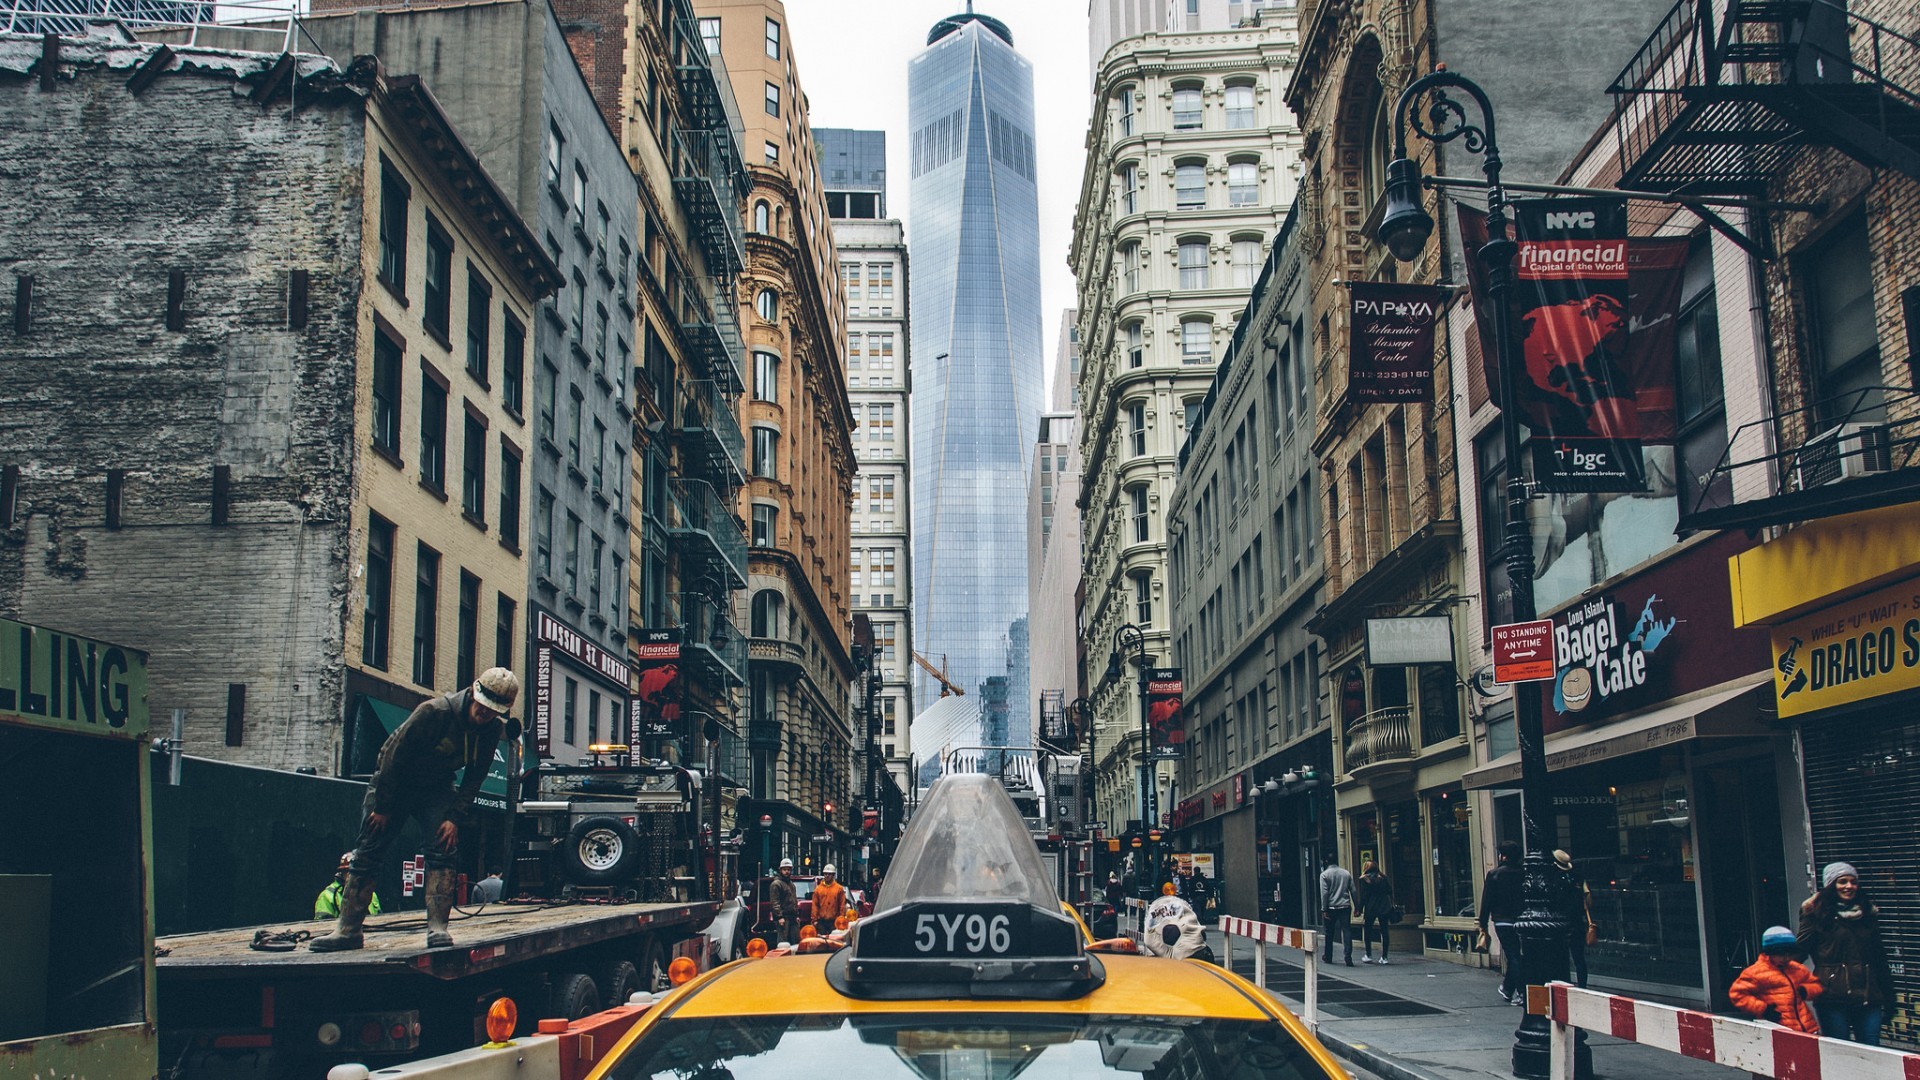 City New York City Taxi Building One World Trade Center 1920x1080